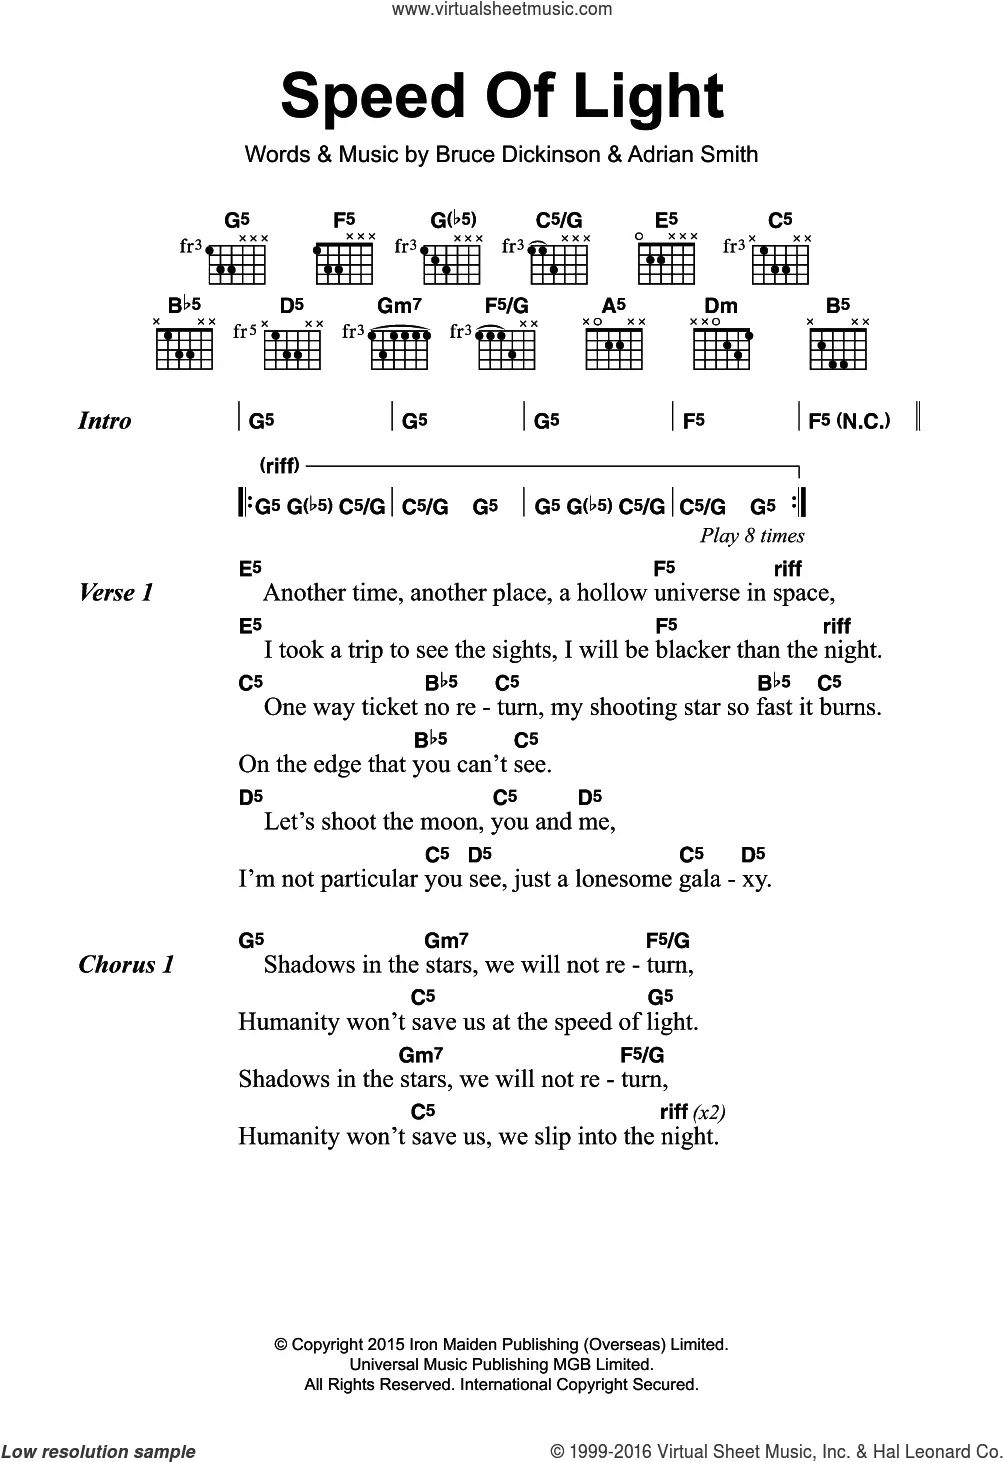 Flightless Bird, American Mouth sheet music for guitar (chords)